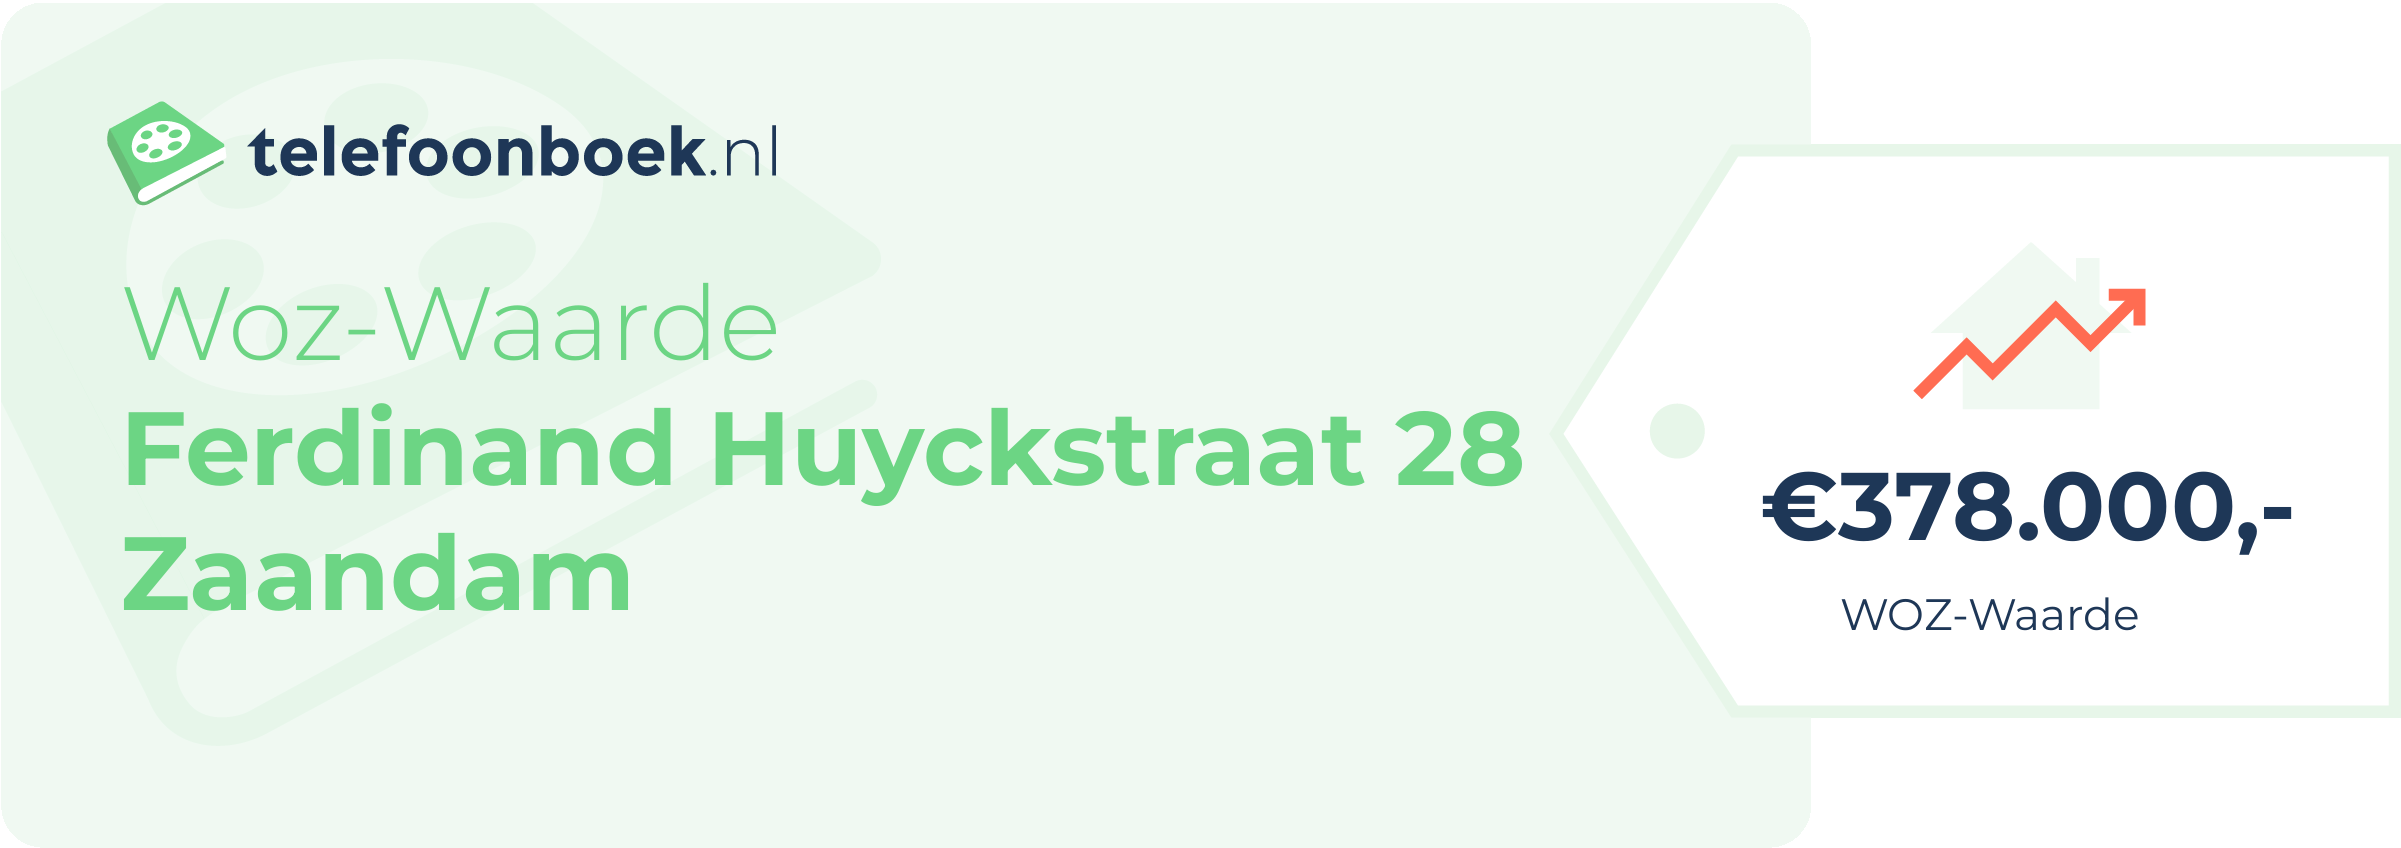 WOZ-waarde Ferdinand Huyckstraat 28 Zaandam